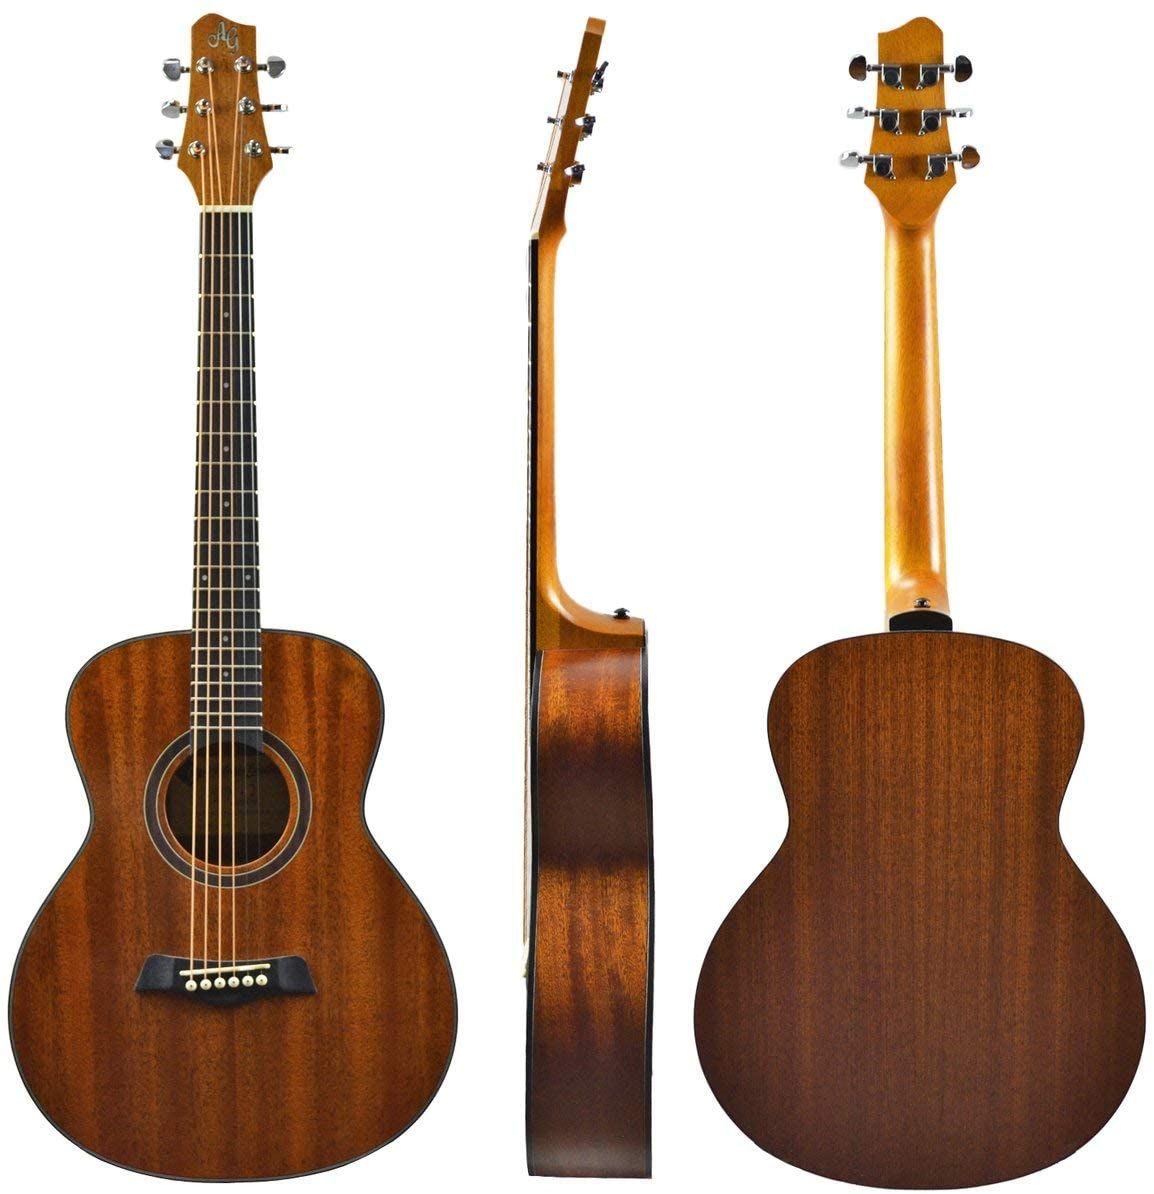 Antonio Giuliani Acoustic Mahogany Guitar showing various views